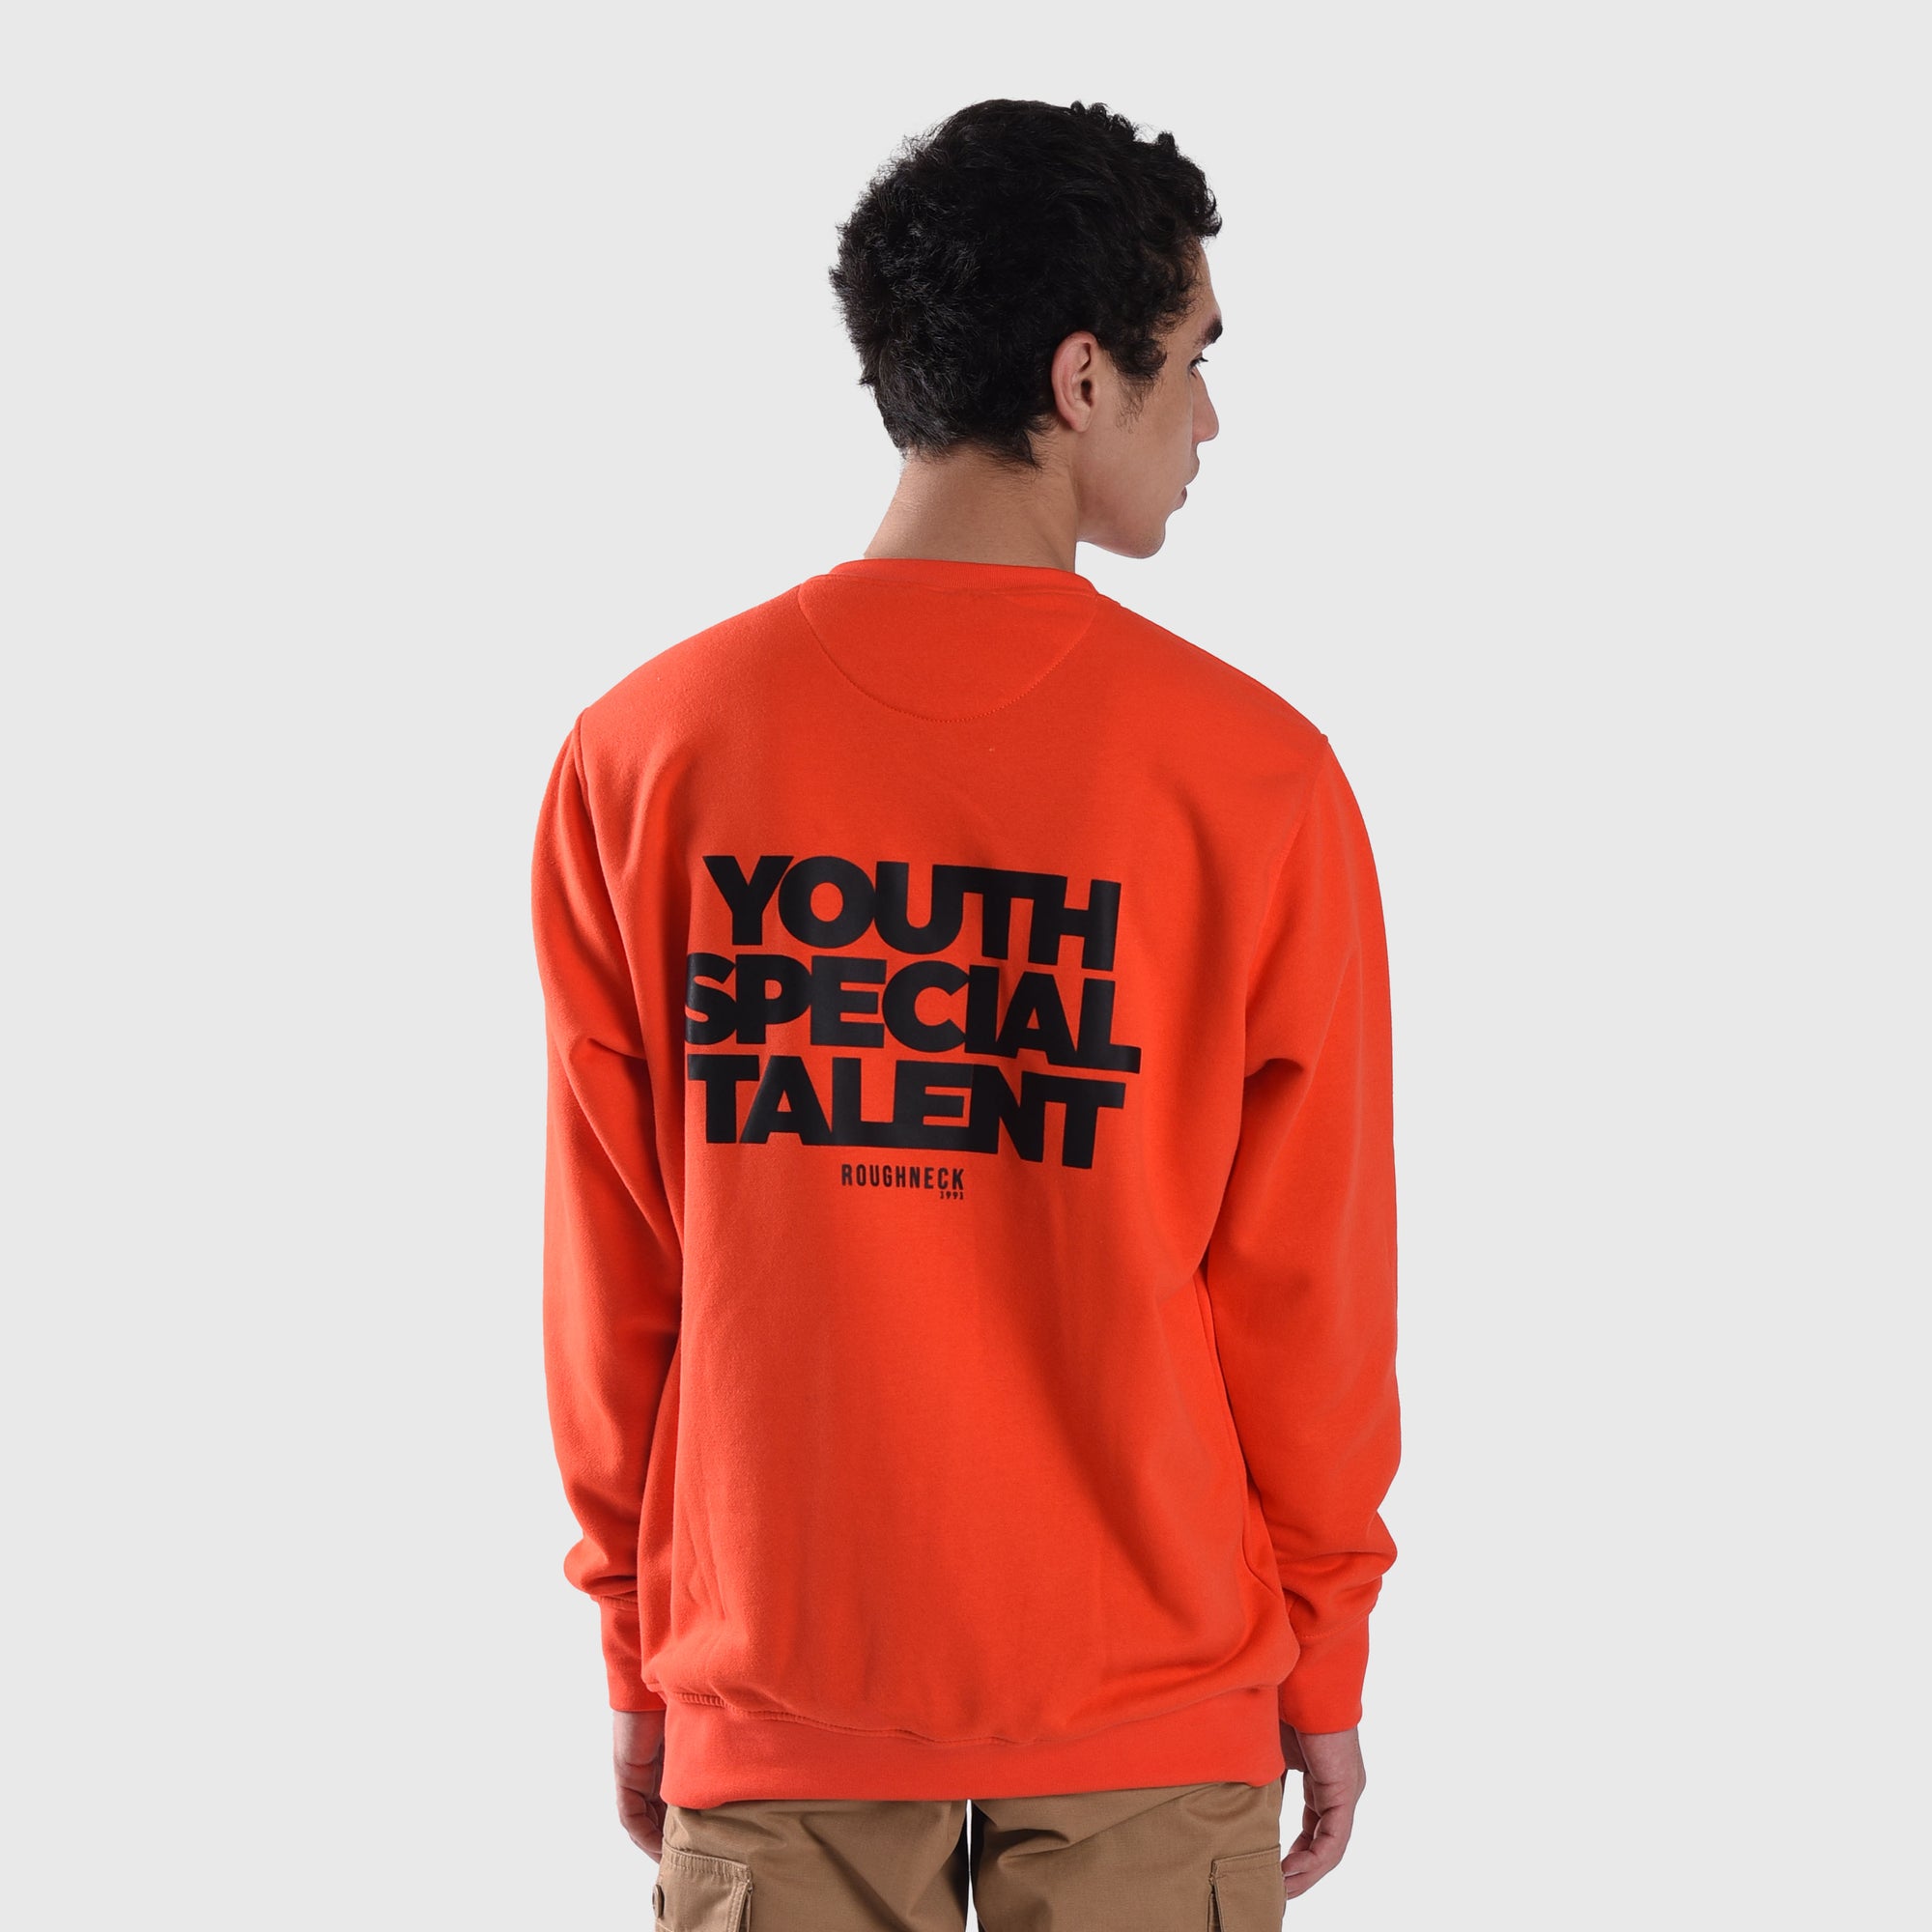 SS475 Orange Youth Talent Crewneck